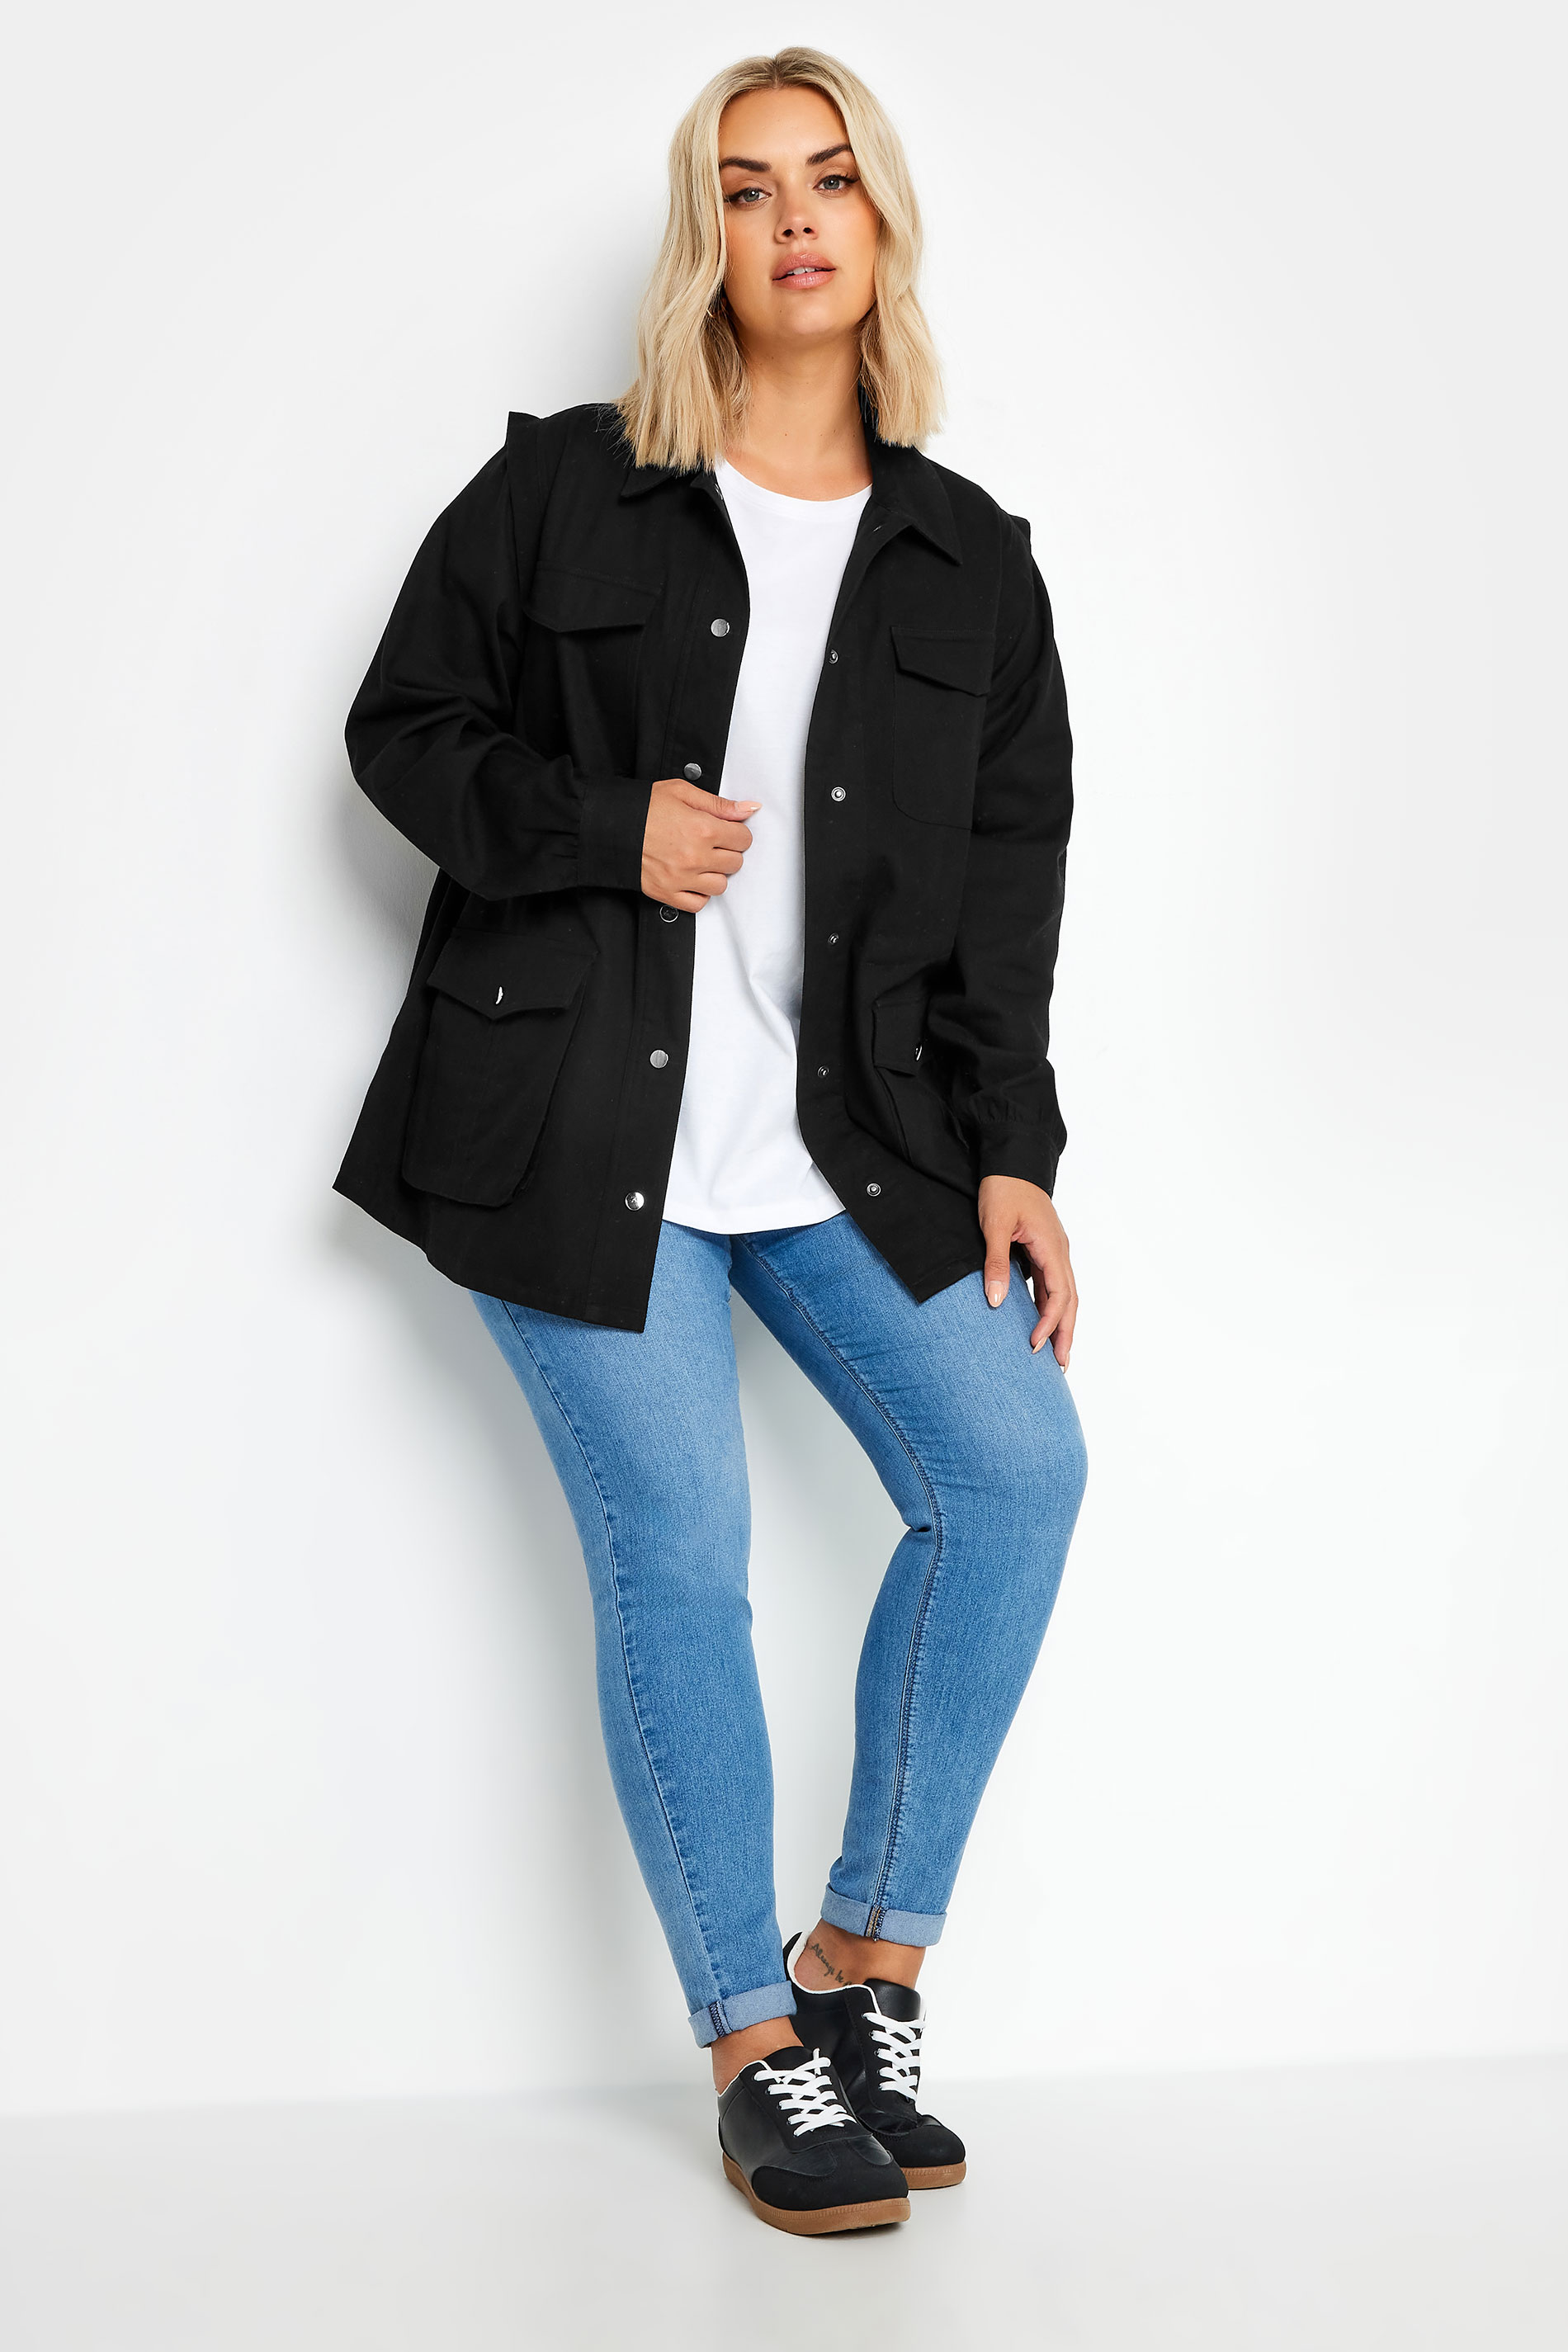 YOURS Plus Size Black Cotton Twill Utility Jacket | Yours Clothing 2